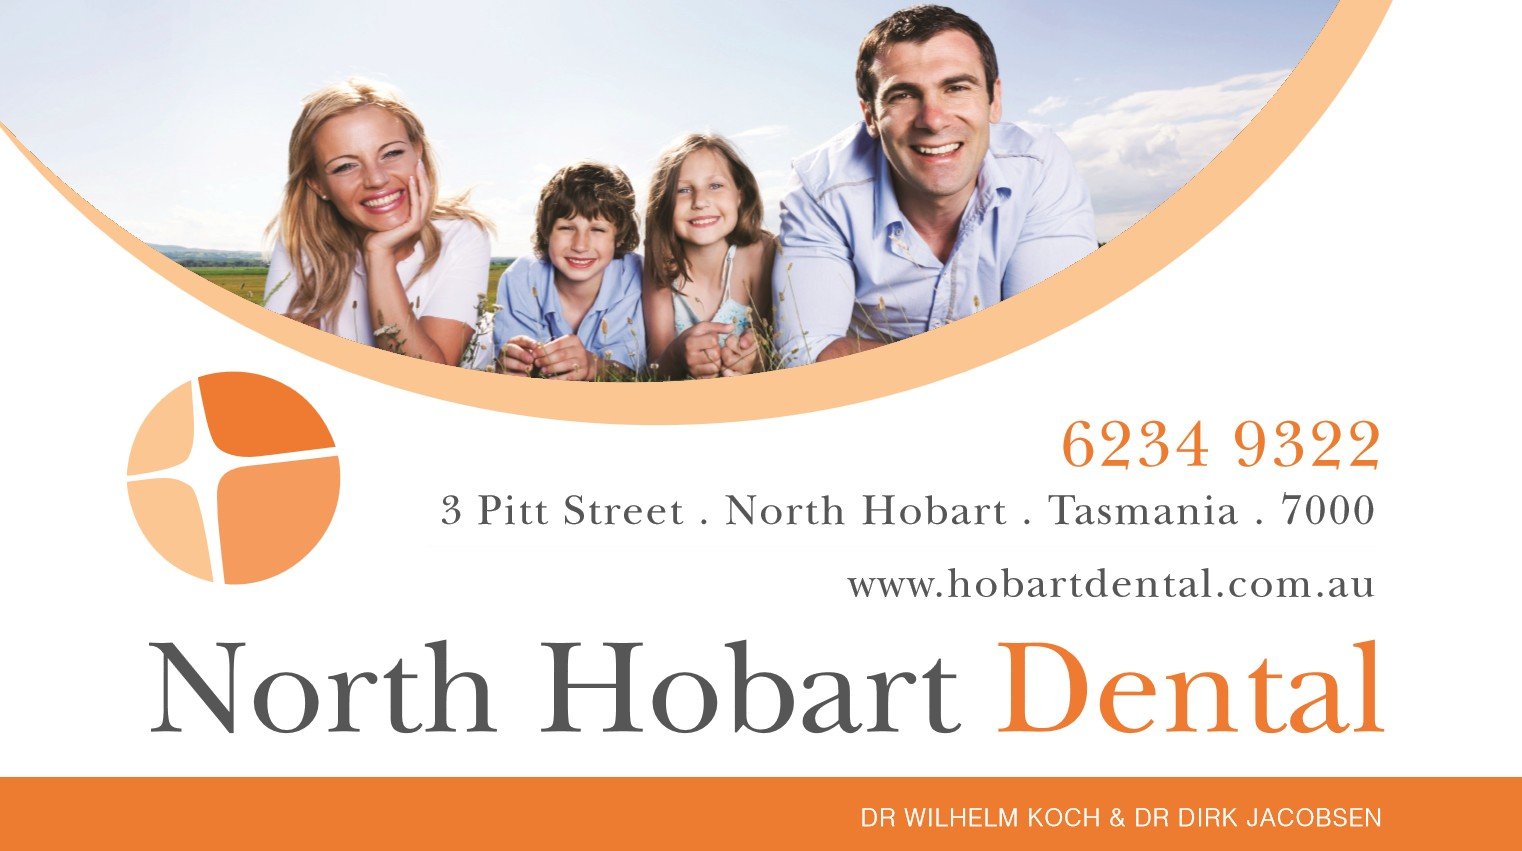 North Hobart Dental - Dentists Hobart 0